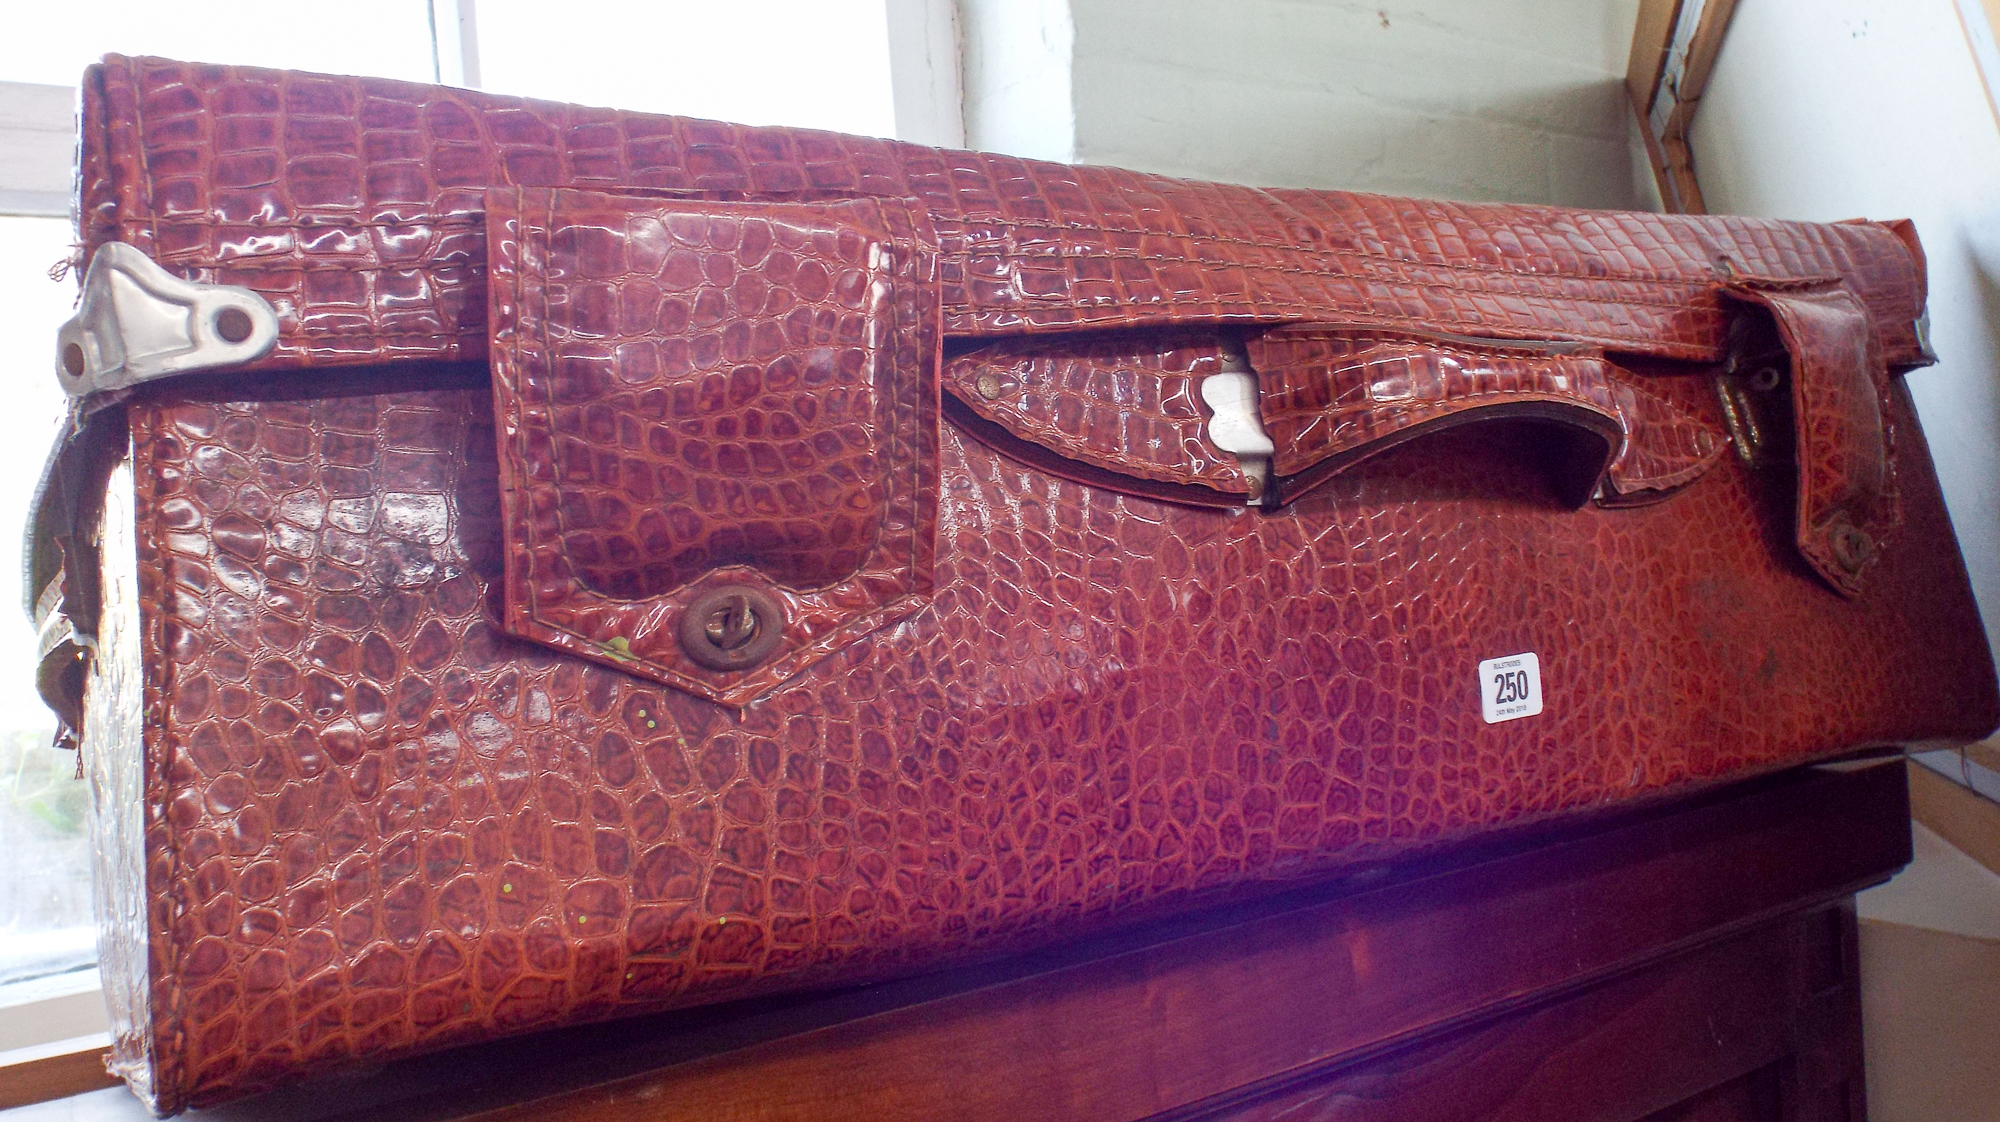 A Crocodile skin style suitcase